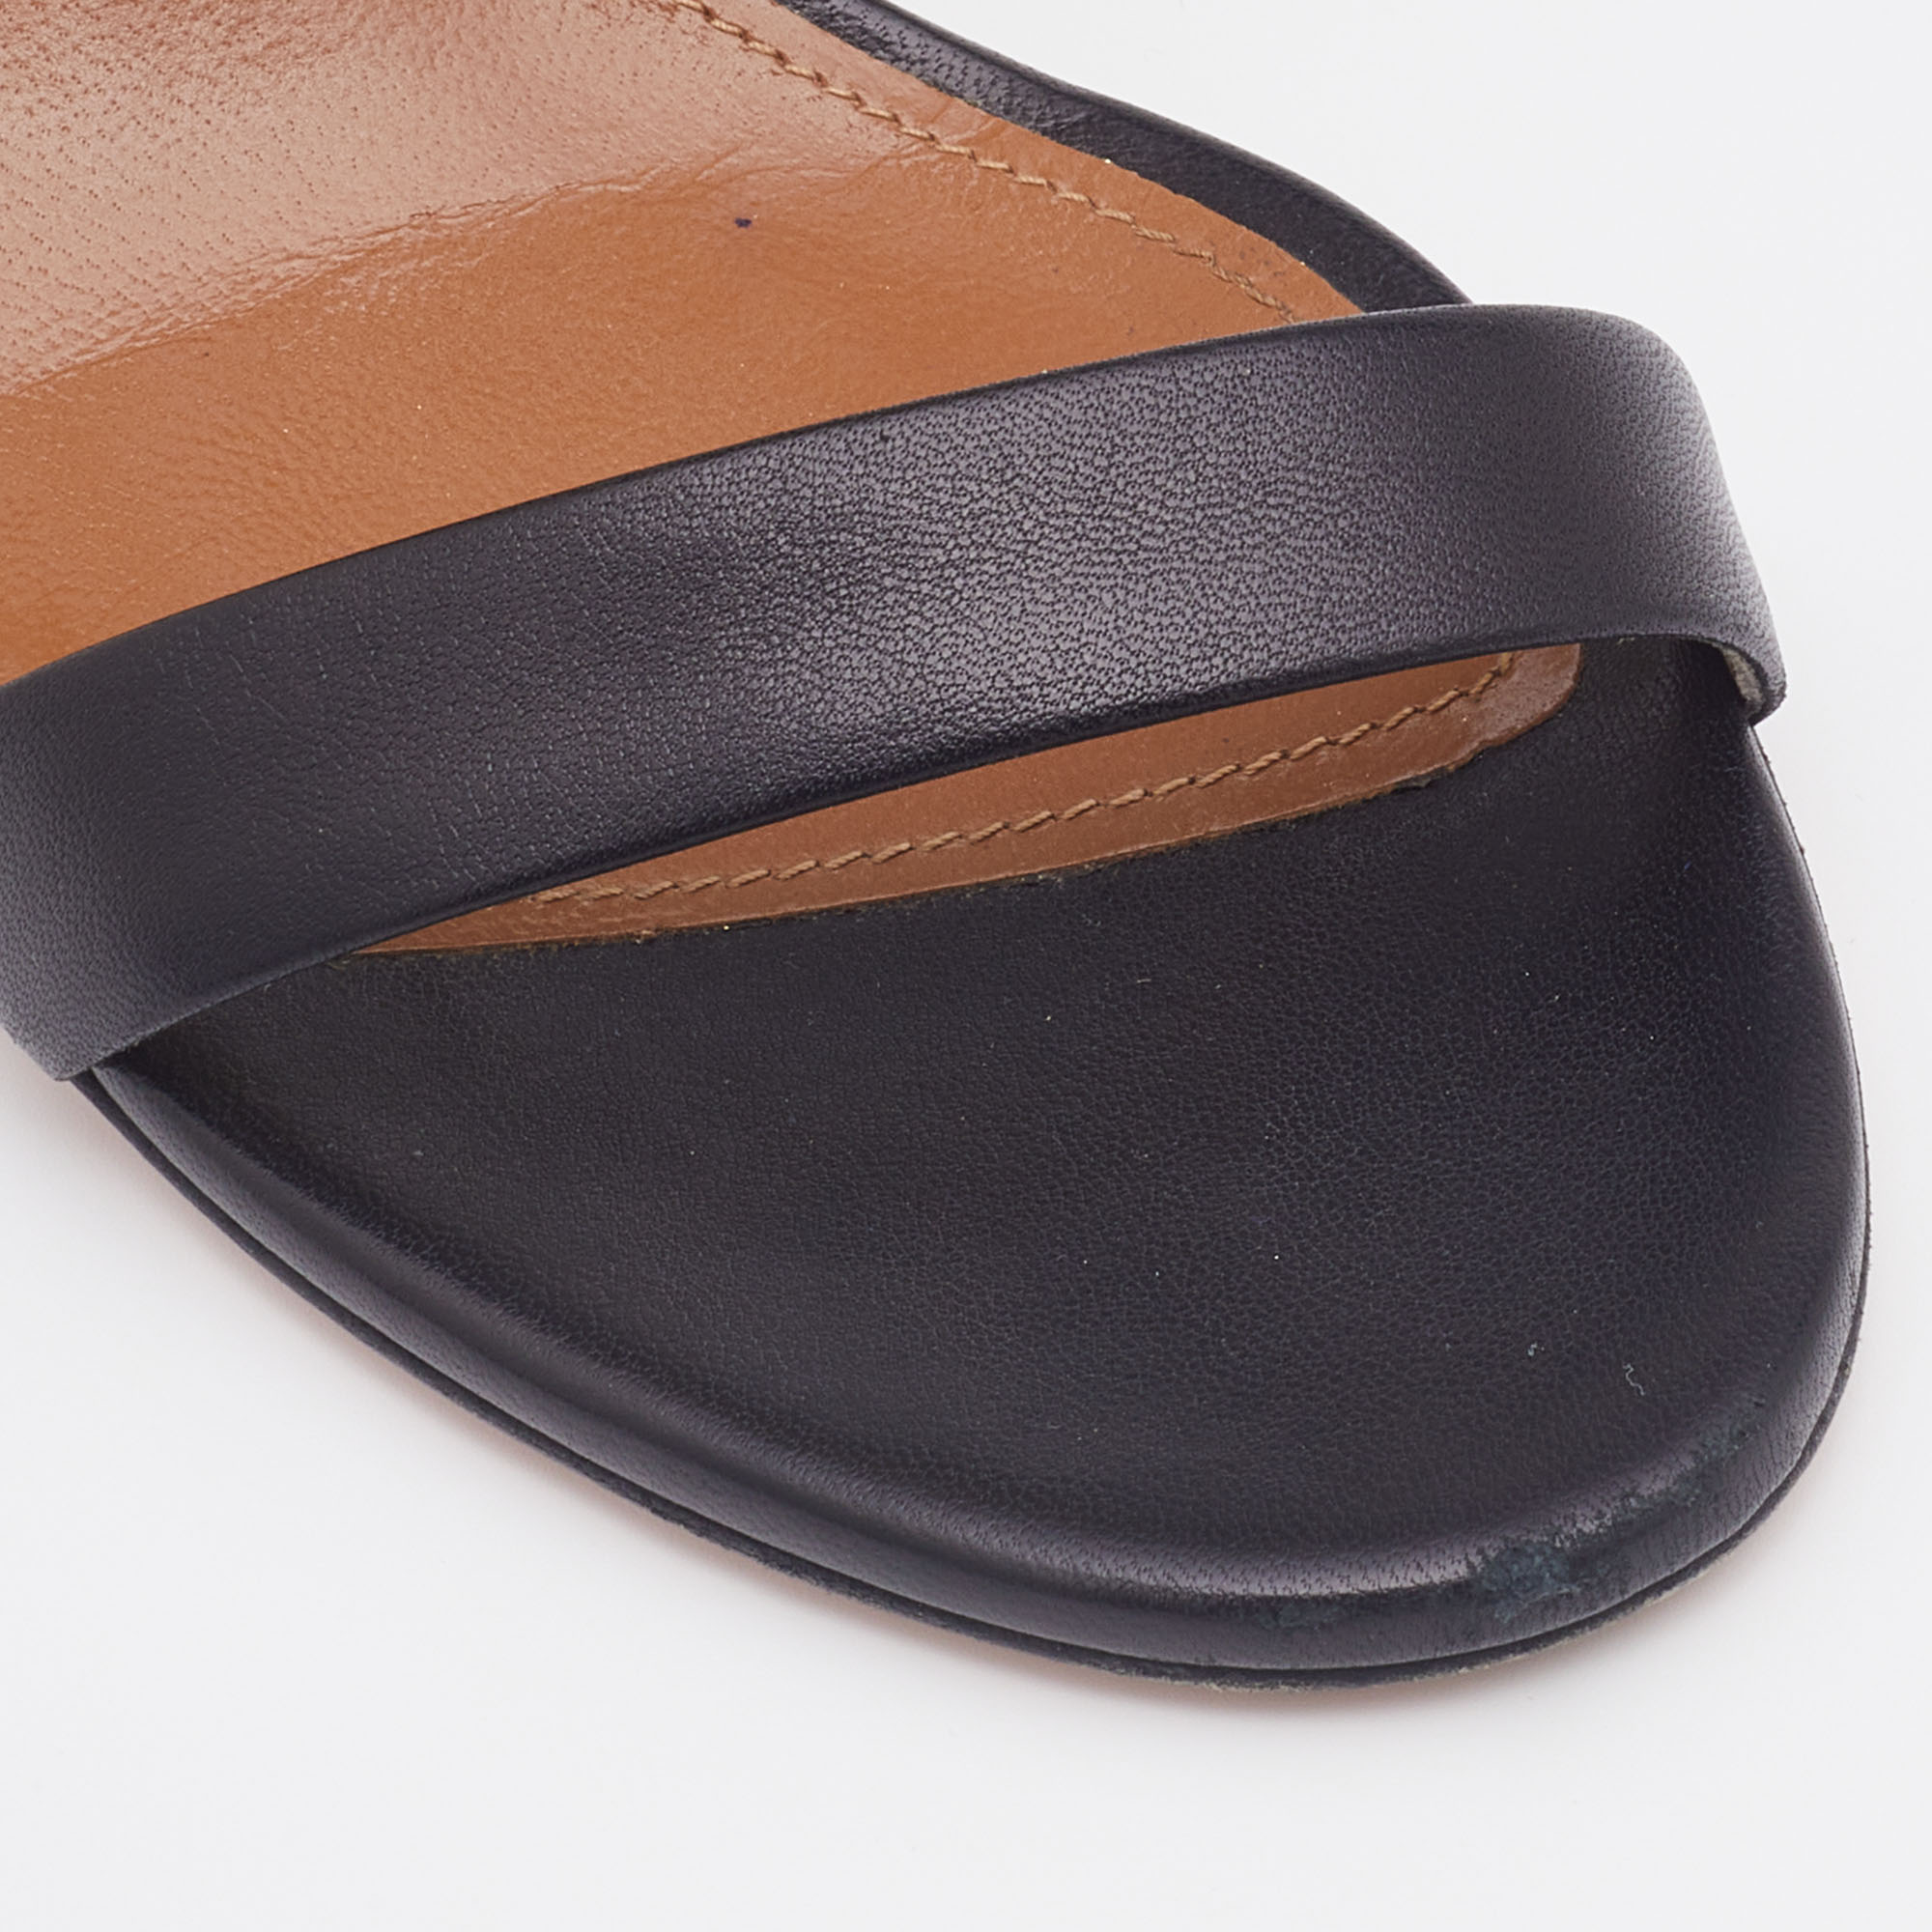 Aquazzura Black Leather Spin Me Around Ankle Cuff Sandals Size 36.5